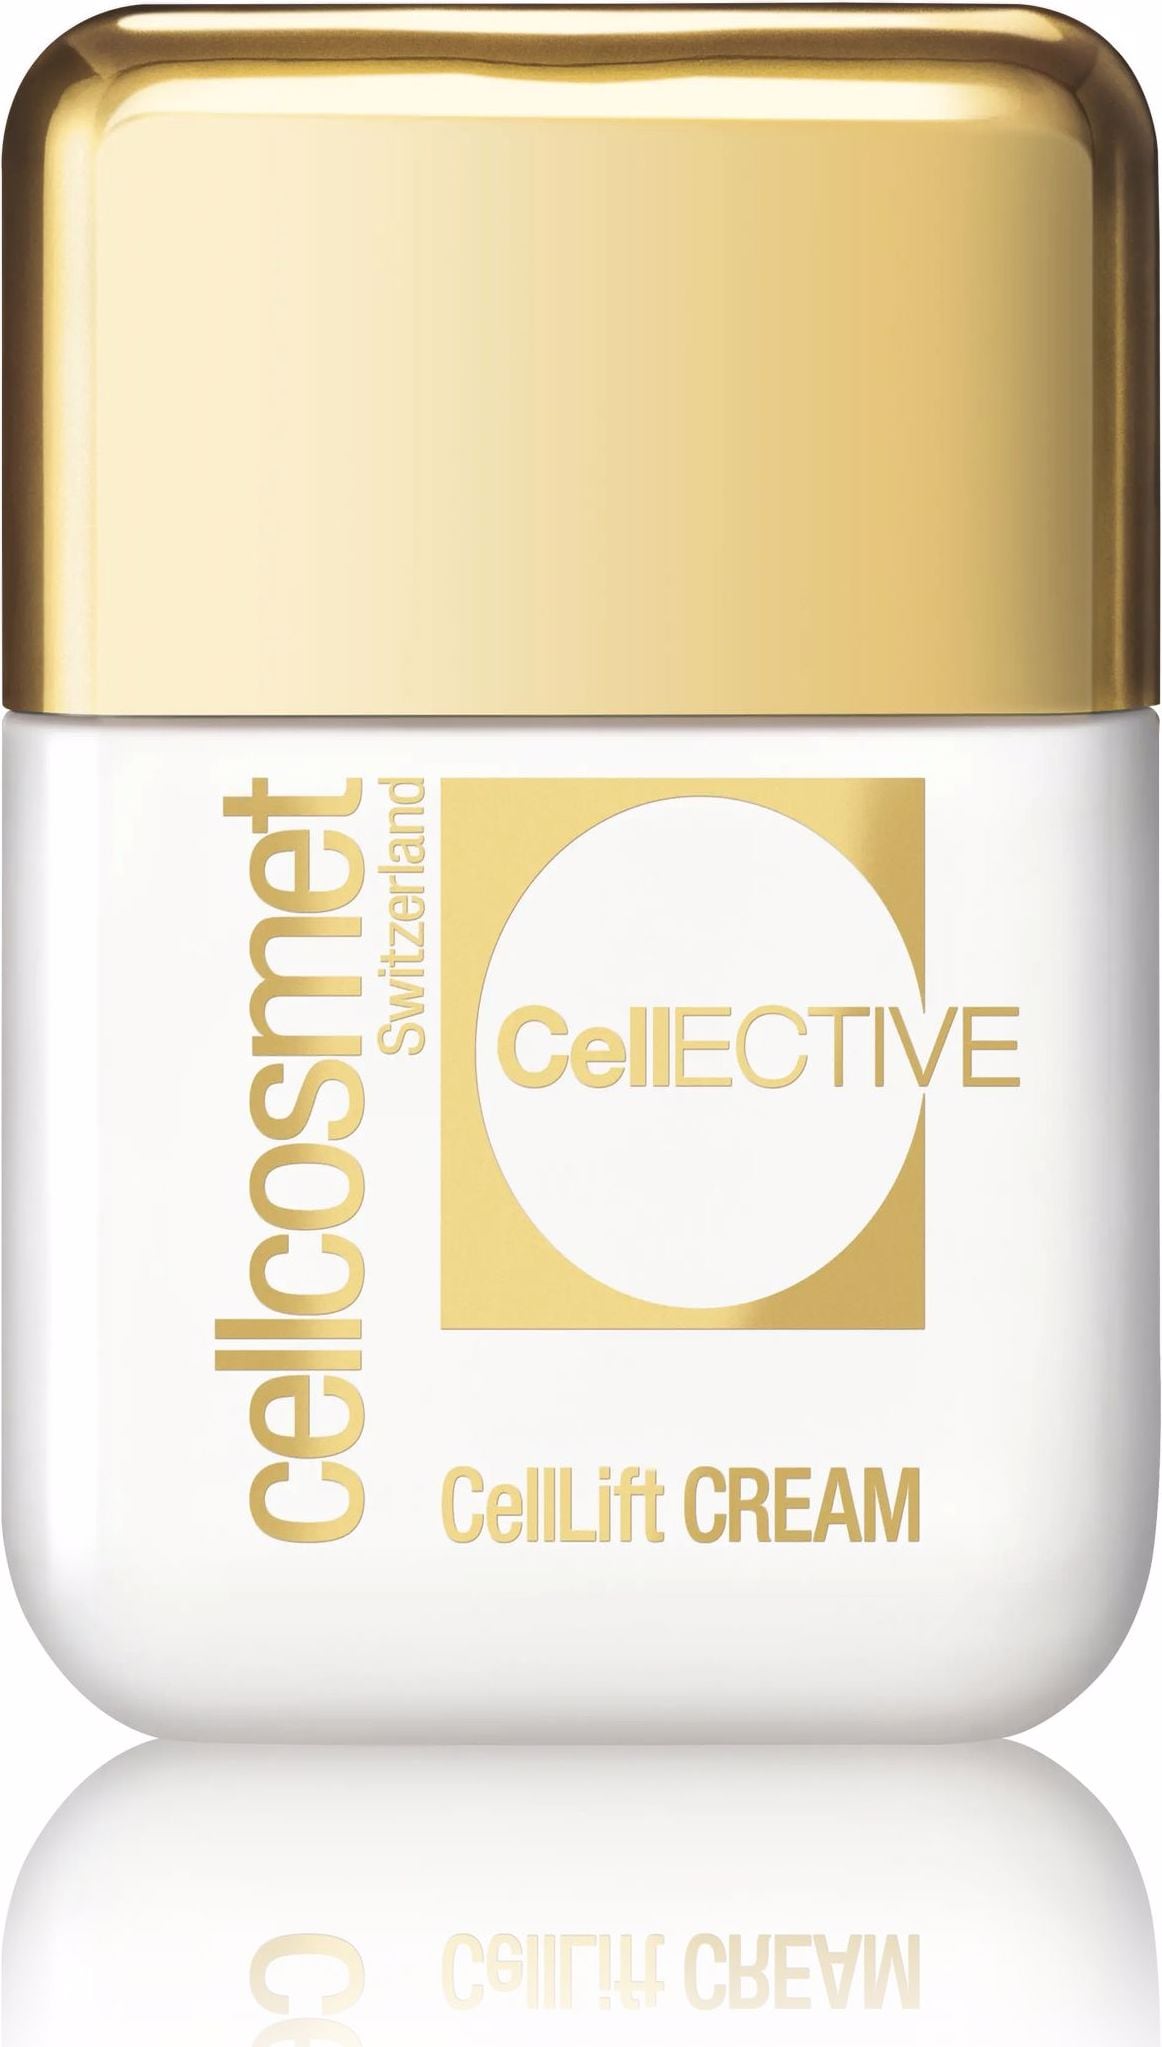 Cellcosmet Cellective Celllift Cream (50 ml Gesichtscrème) Galaxus